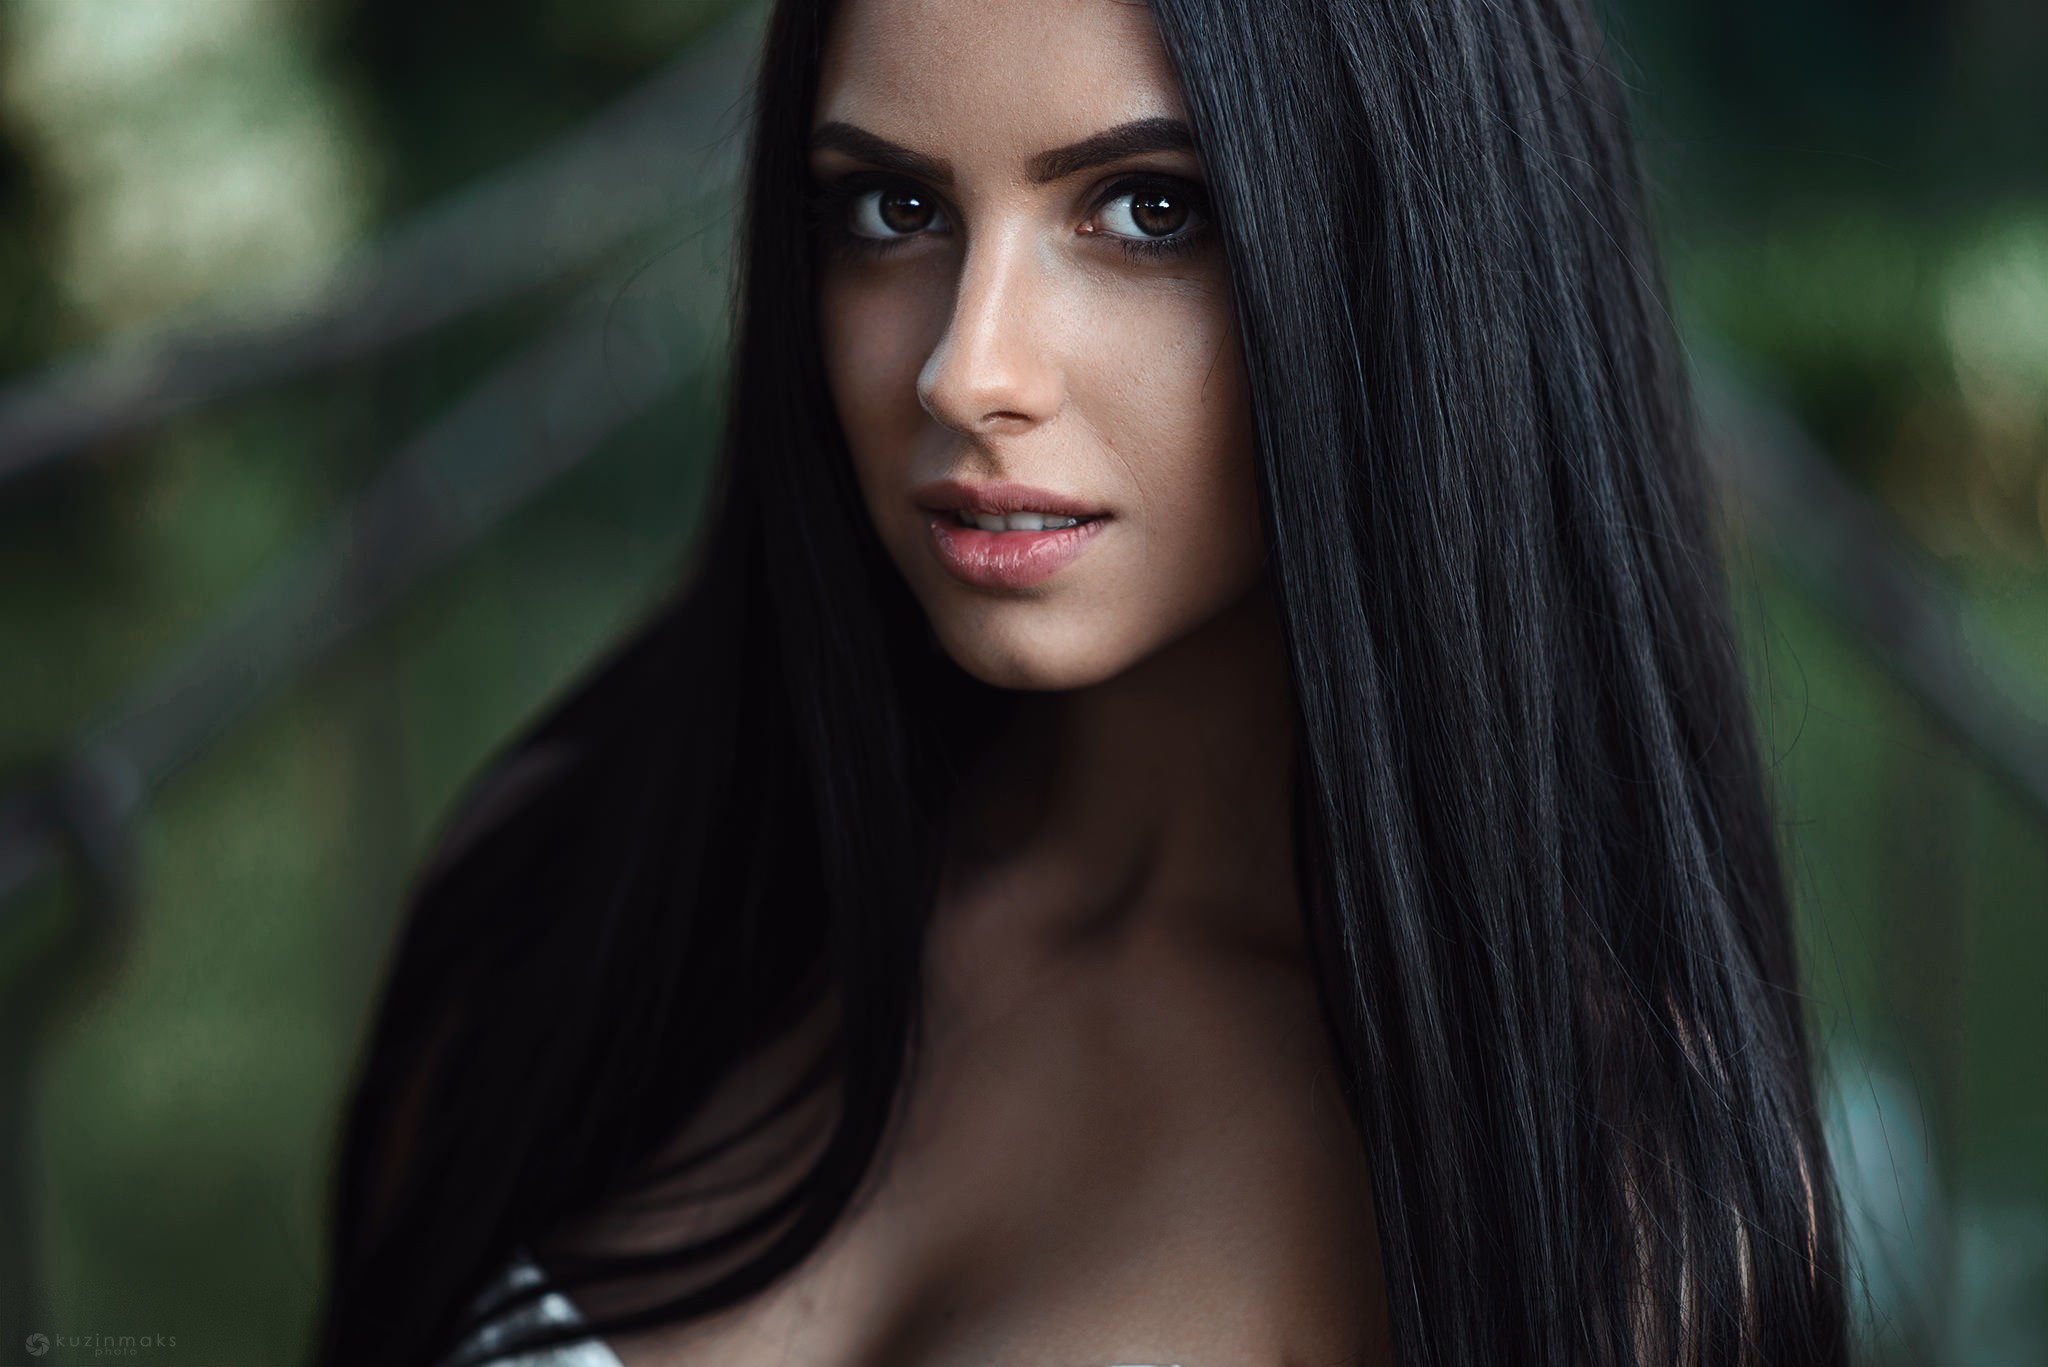 People 2048x1367 women face portrait Darina Maks Kuzin model black hair long hair closeup women outdoors outdoors green background